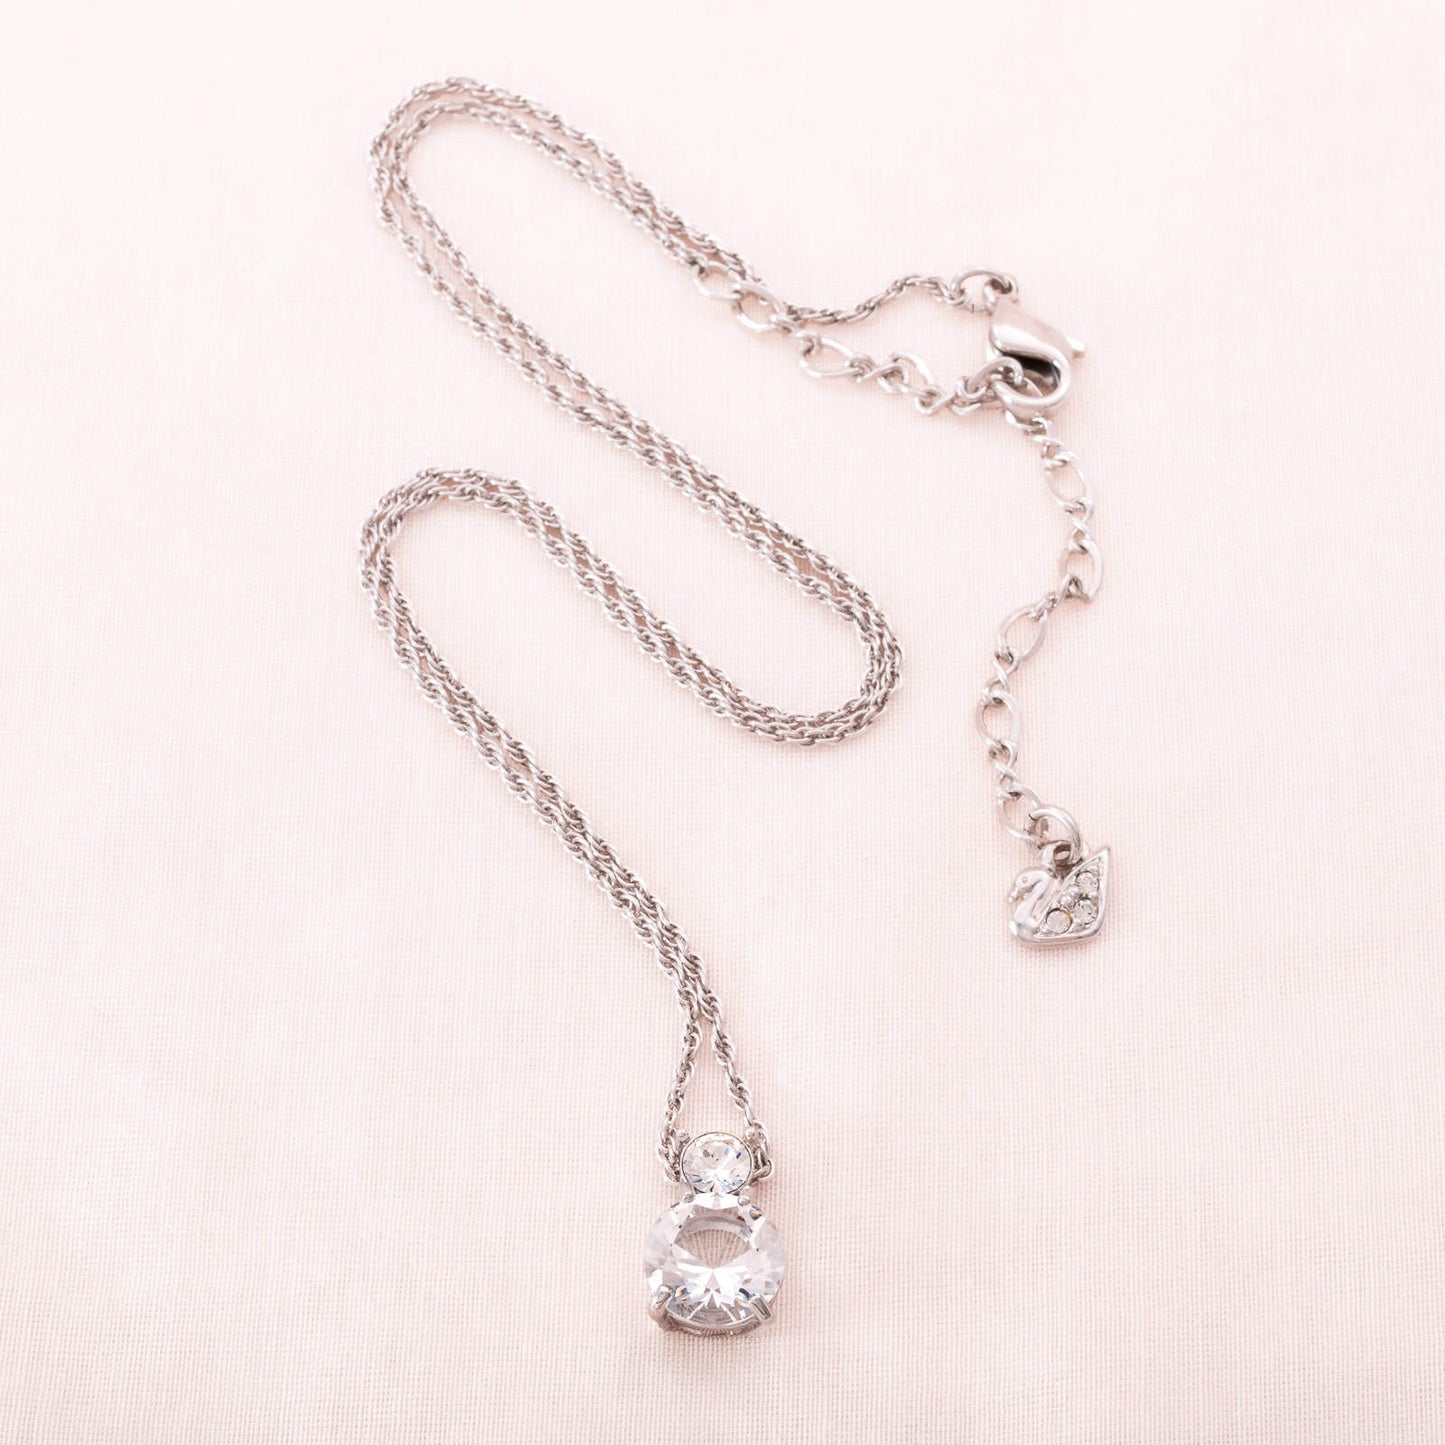 SWAROVSKI fine cord necklace with crystal pendant